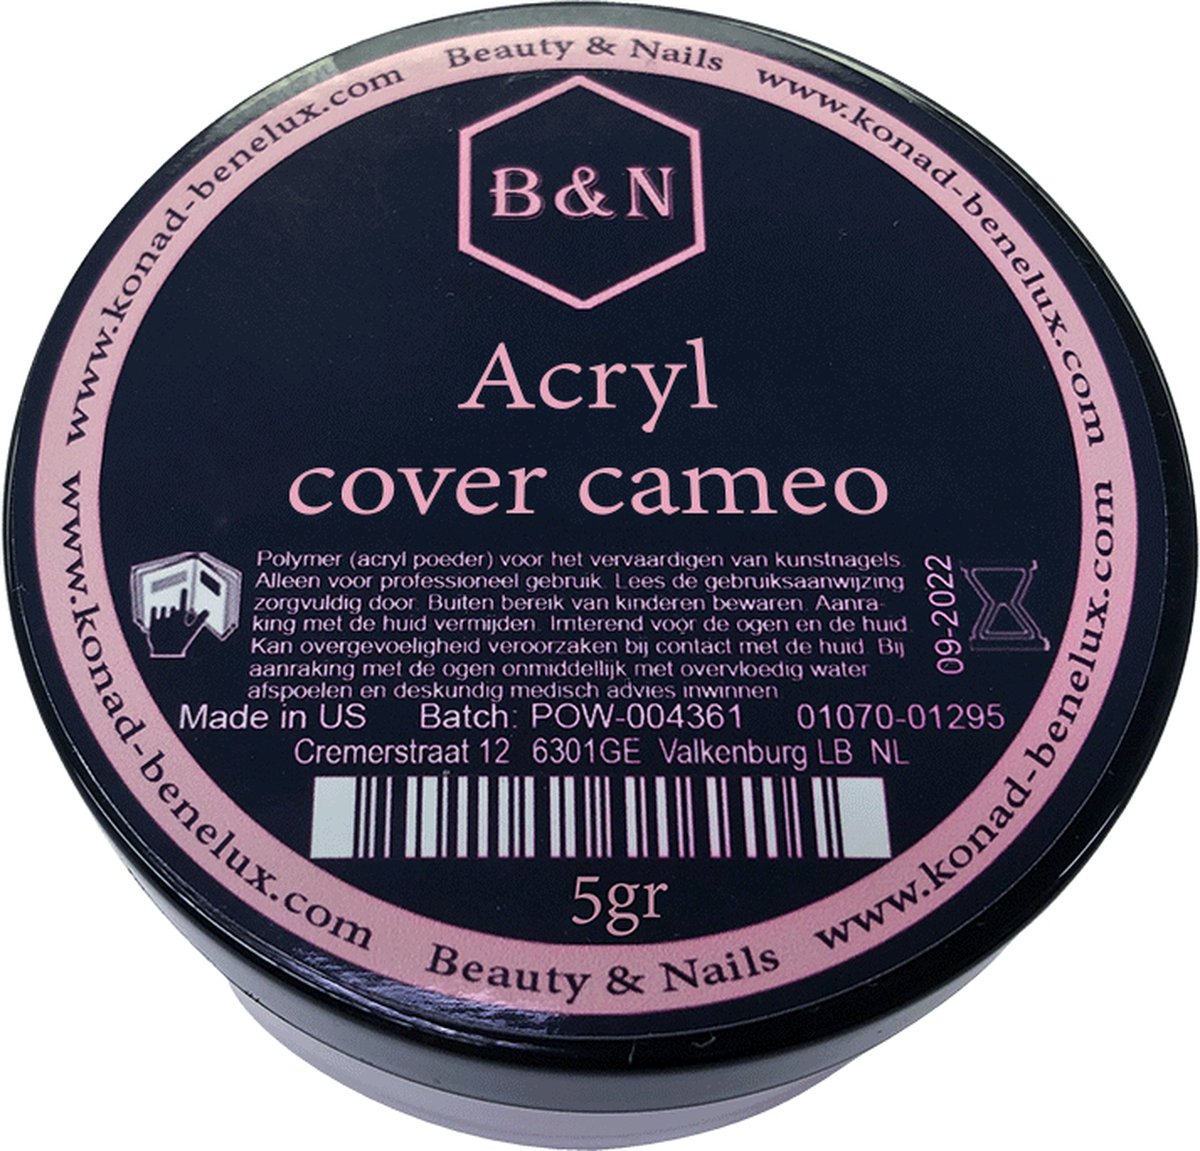 Acryl - cover cameo - 5 gr | B&N - acrylpoeder - VEGAN - acrylpoeder